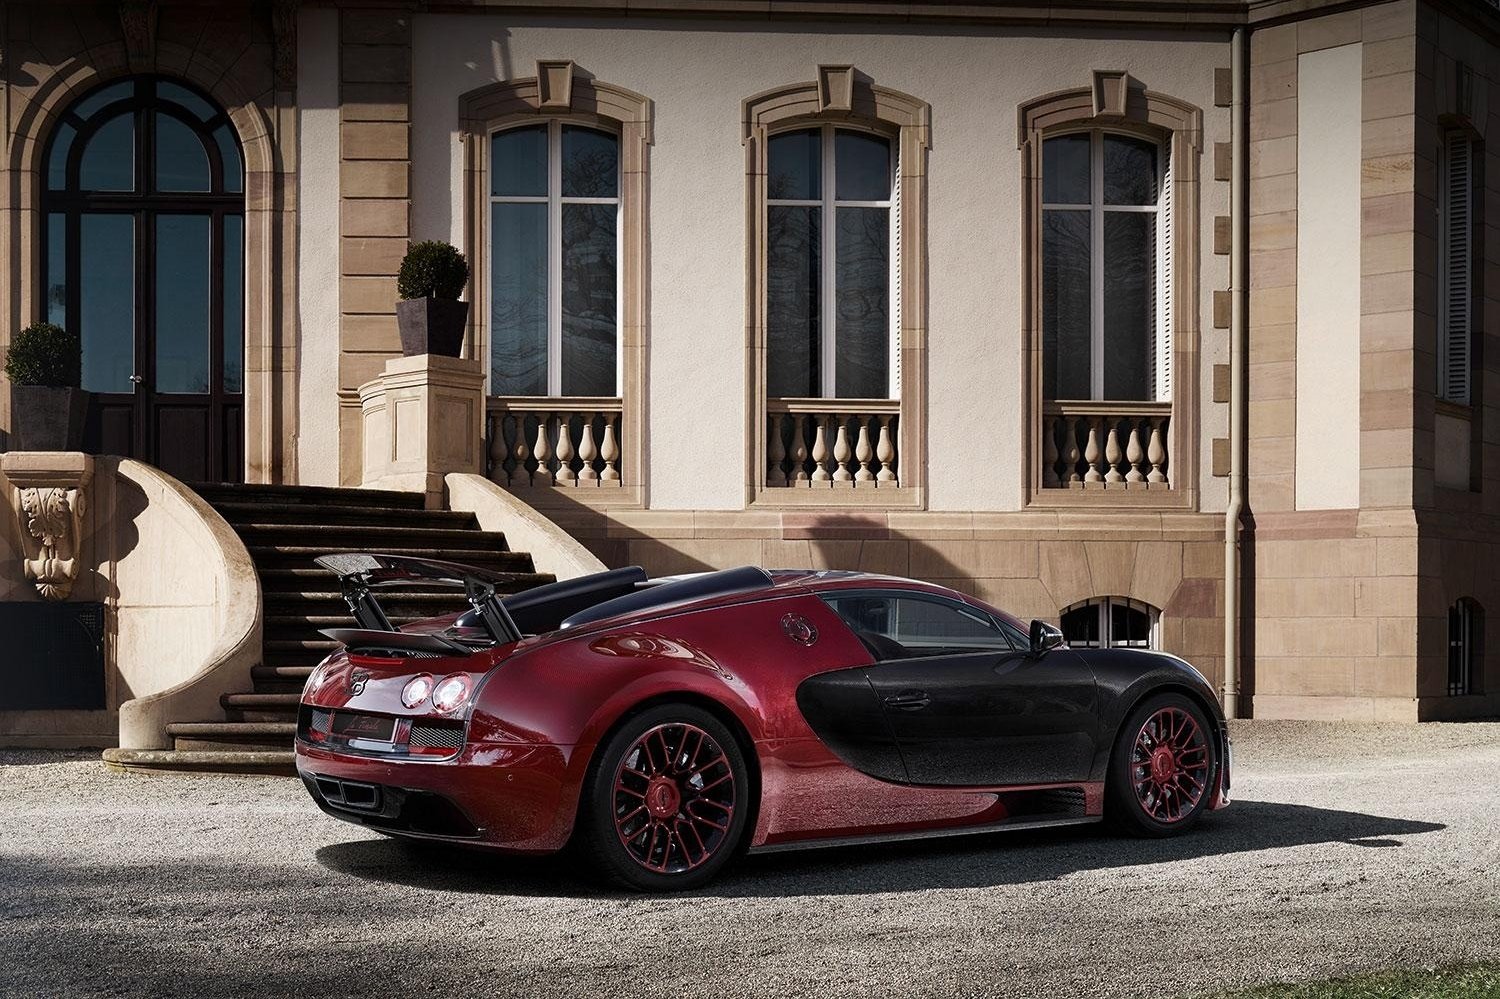 Dit is de allerlaatste Bugatti Veyron